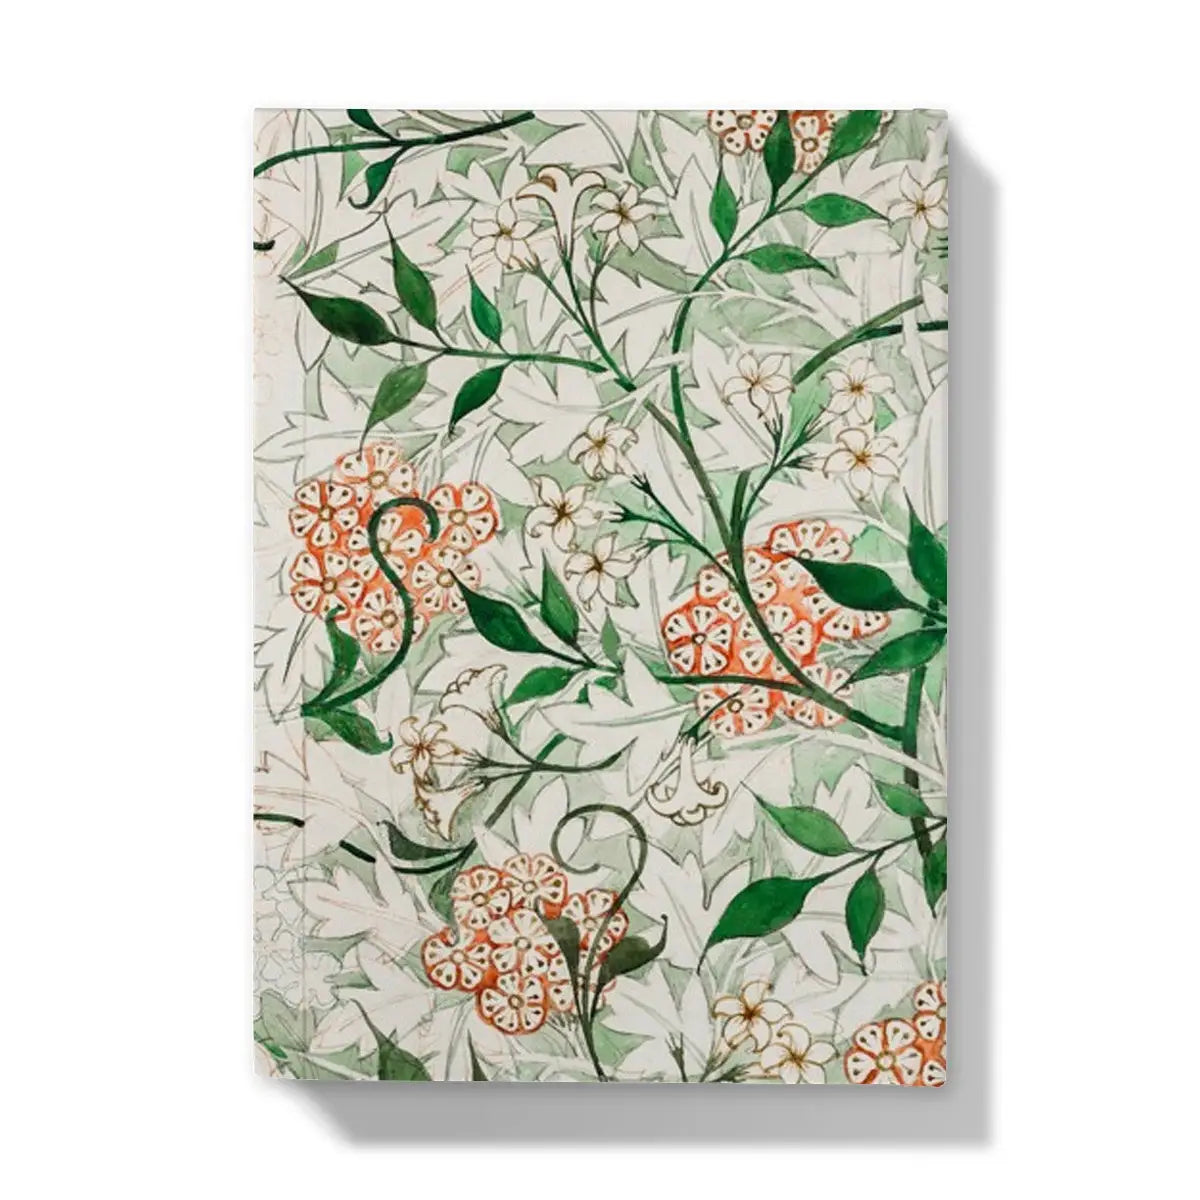 Jasmine - William Morris British Floral Textile Art Journal - Notebooks & Notepads - Aesthetic Art